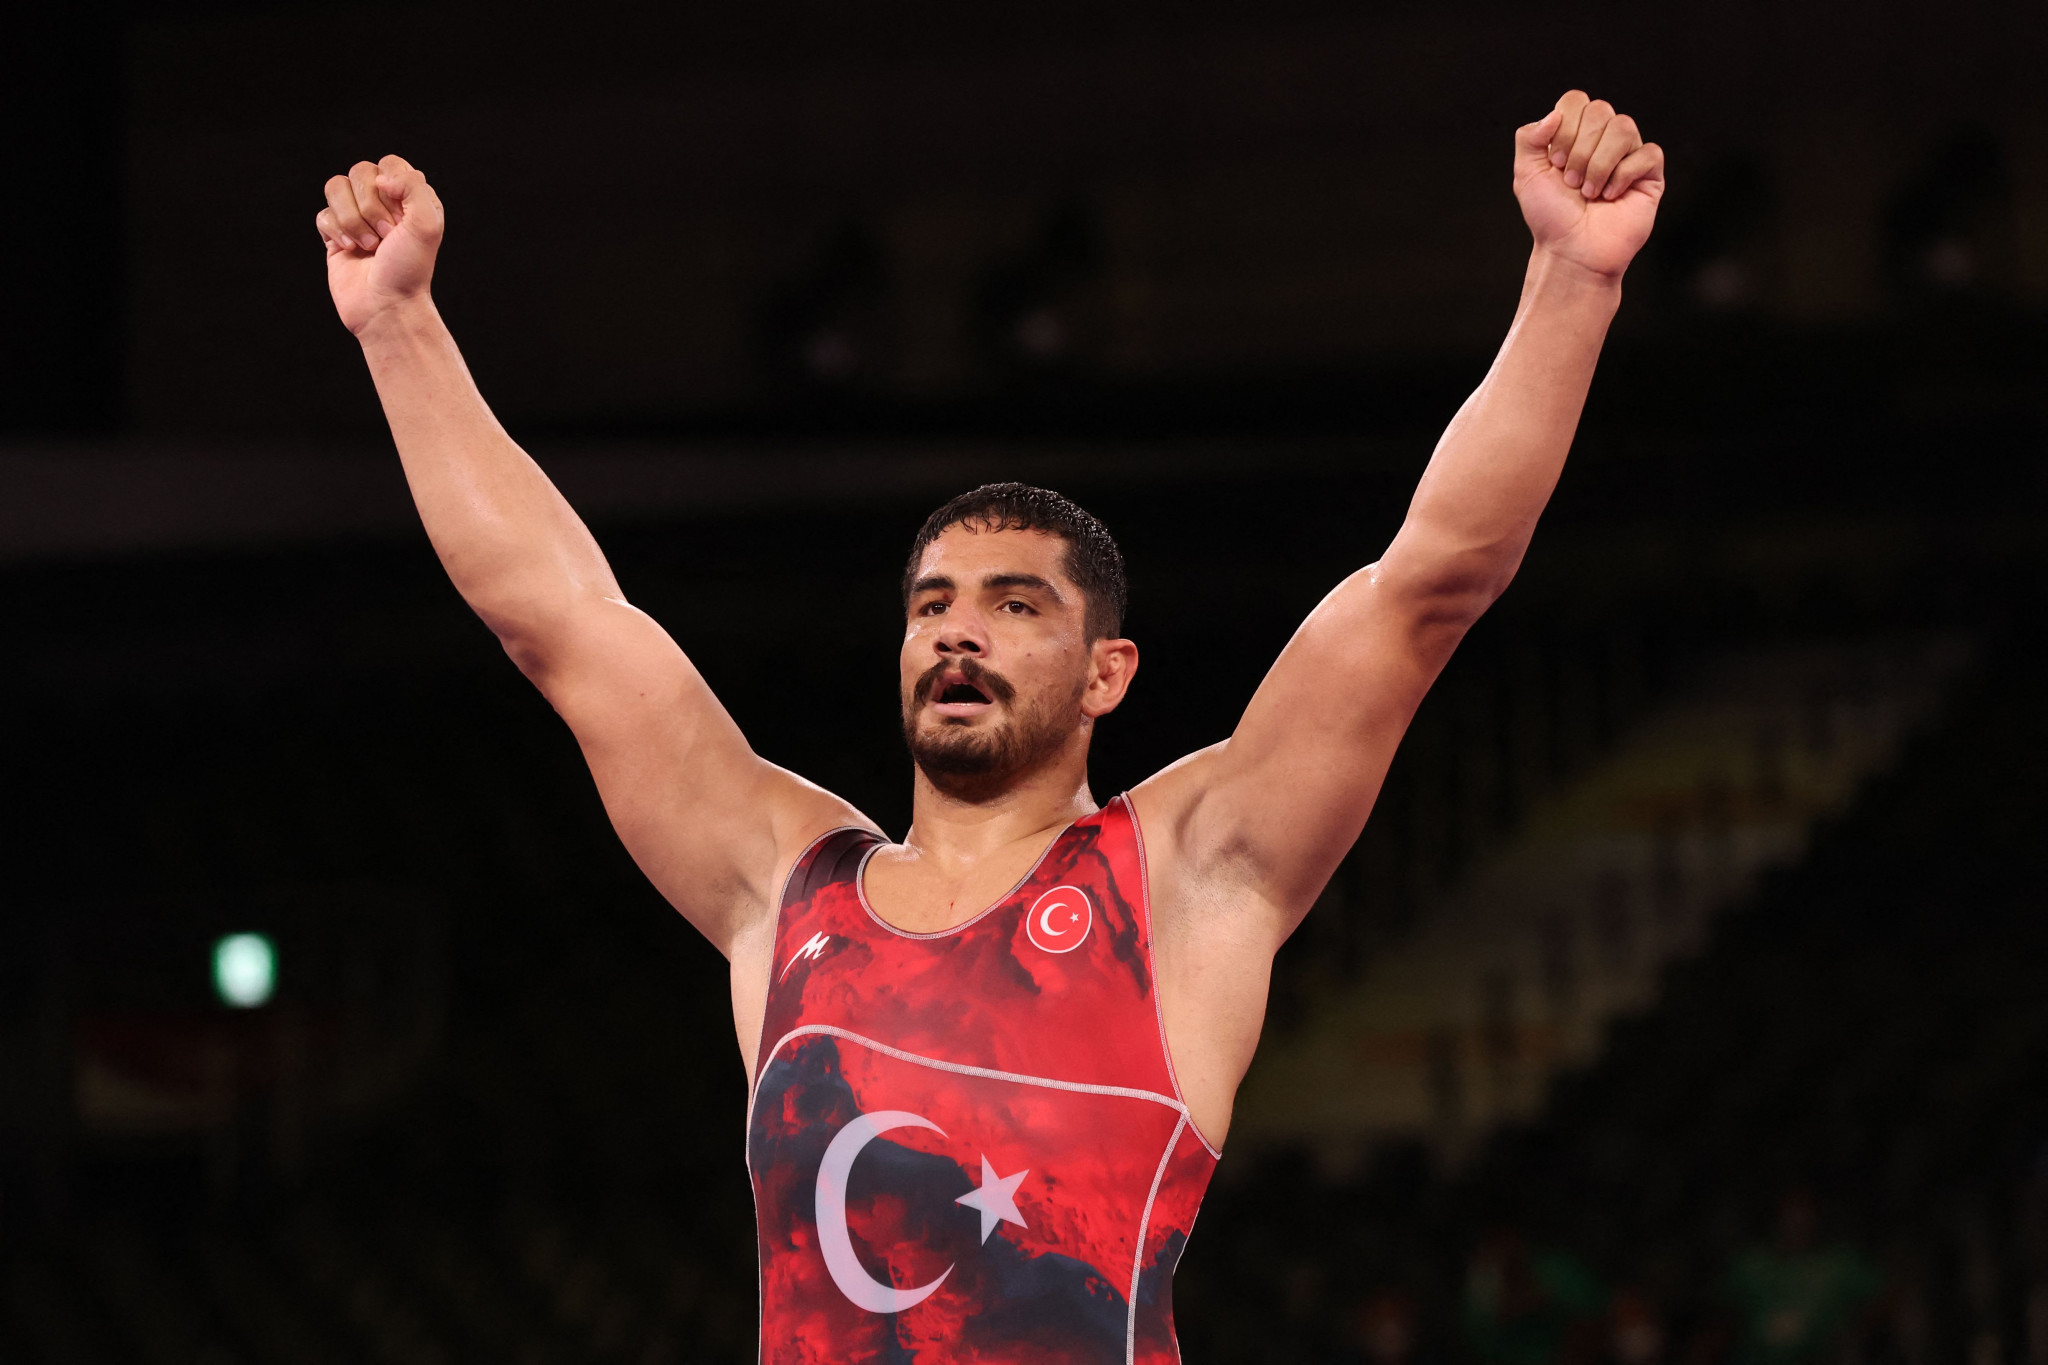 Akgül prevails in heavyweight final against Petriashvili at European Wrestling Championships